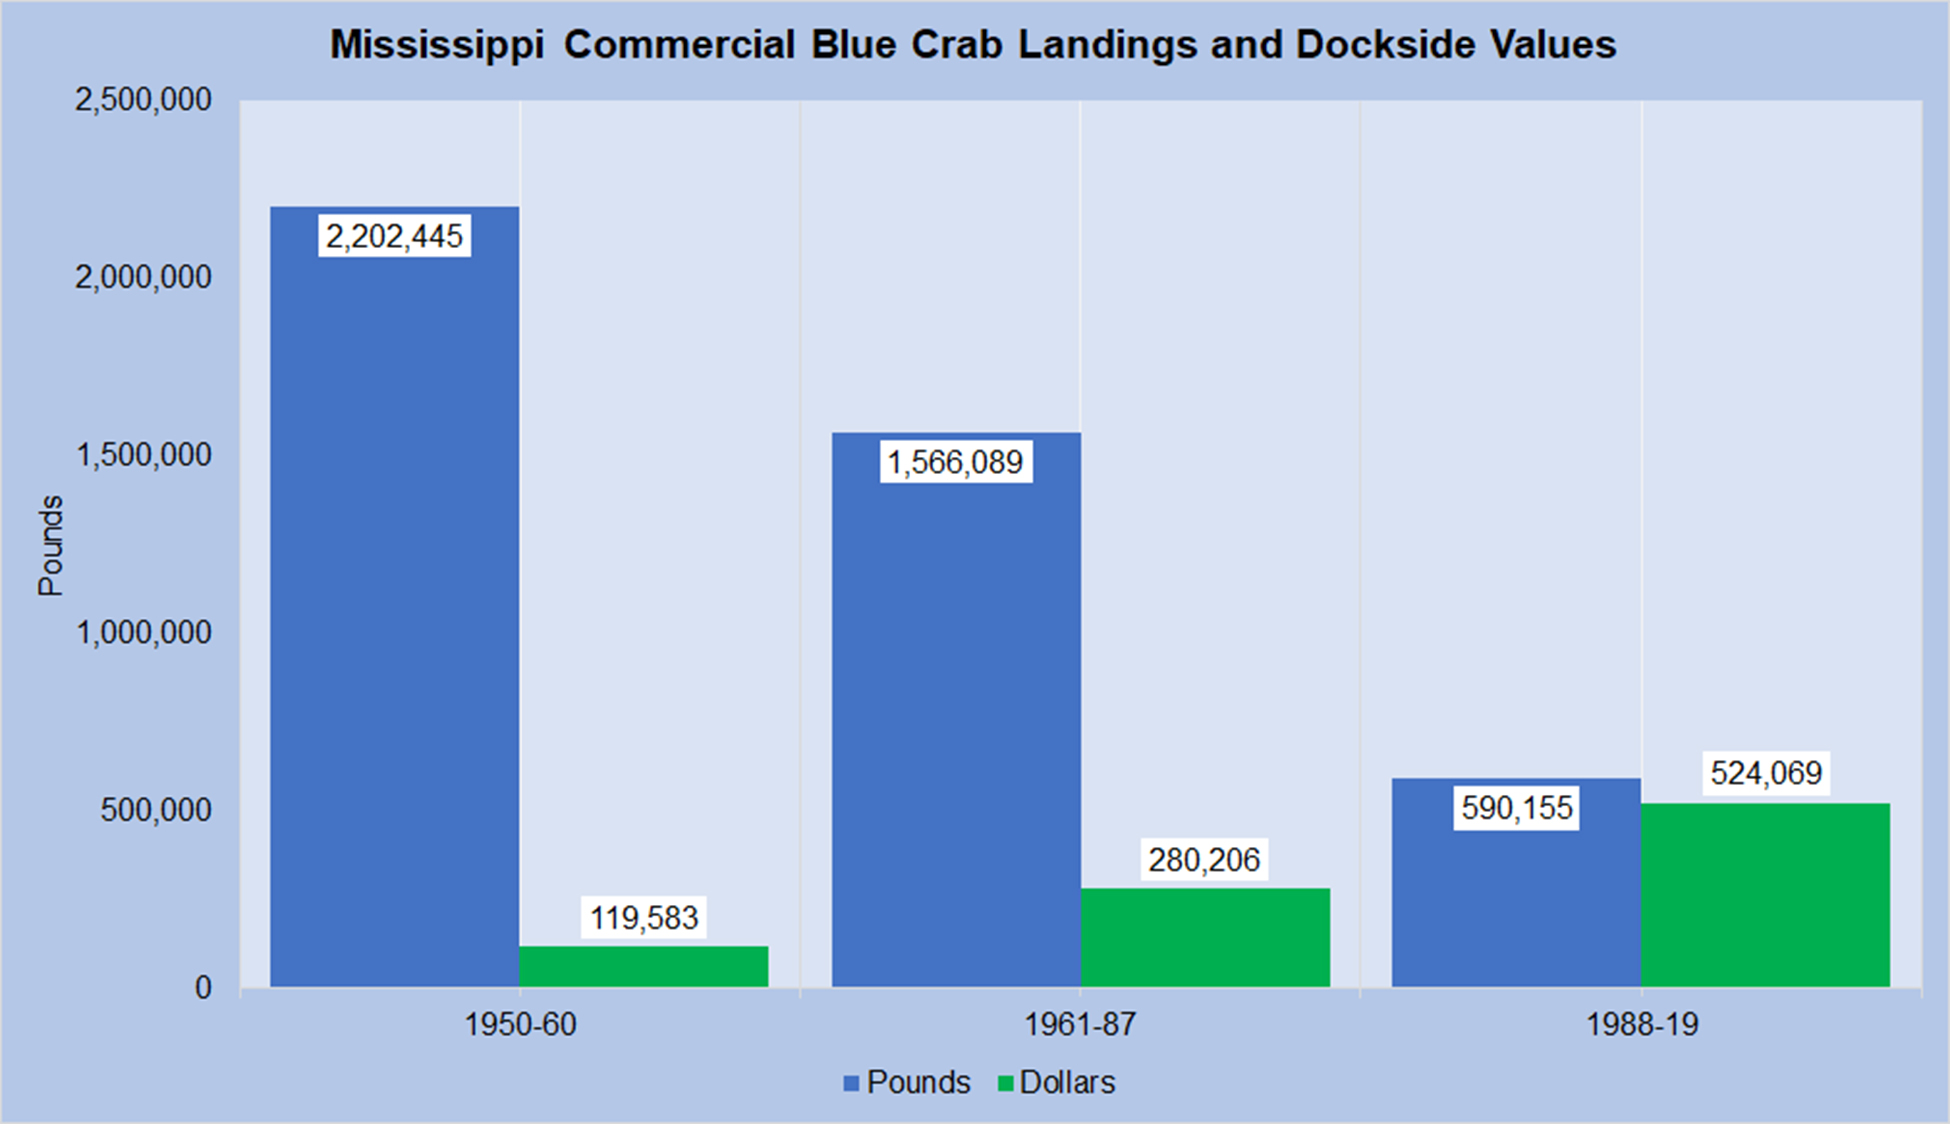 blue-crabs-landings-values-by-period-ms.jpg